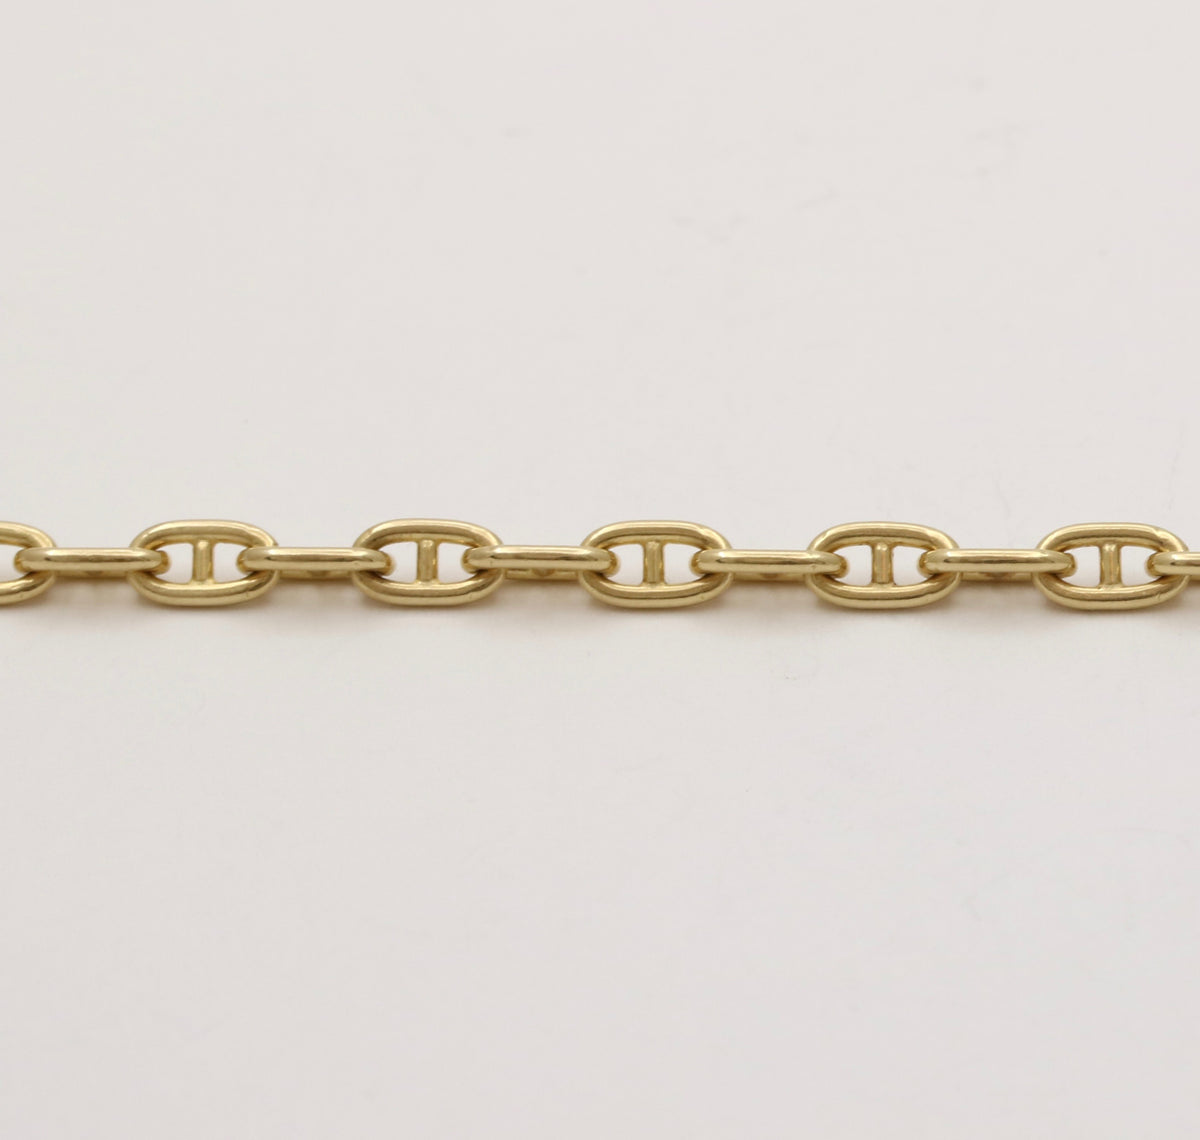 14K Mariner Chain Link Bracelet